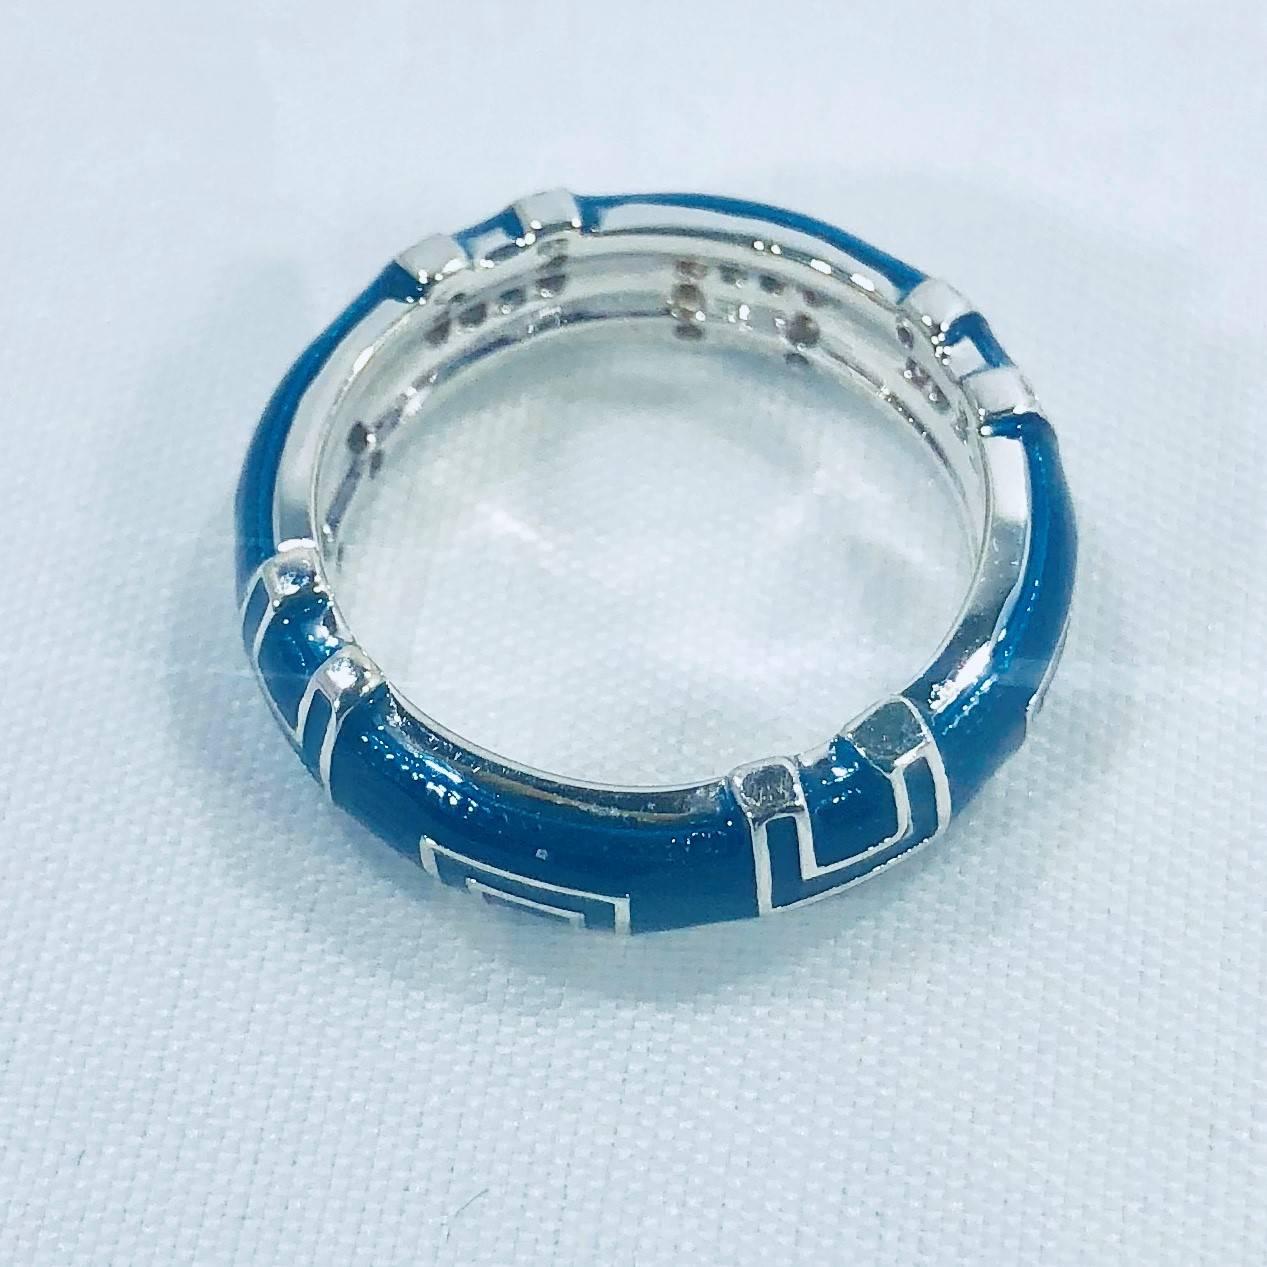 Women's or Men's Hidalgo 18 Karat White Gold and Diamond with Bright Blue Enamel Band Ring